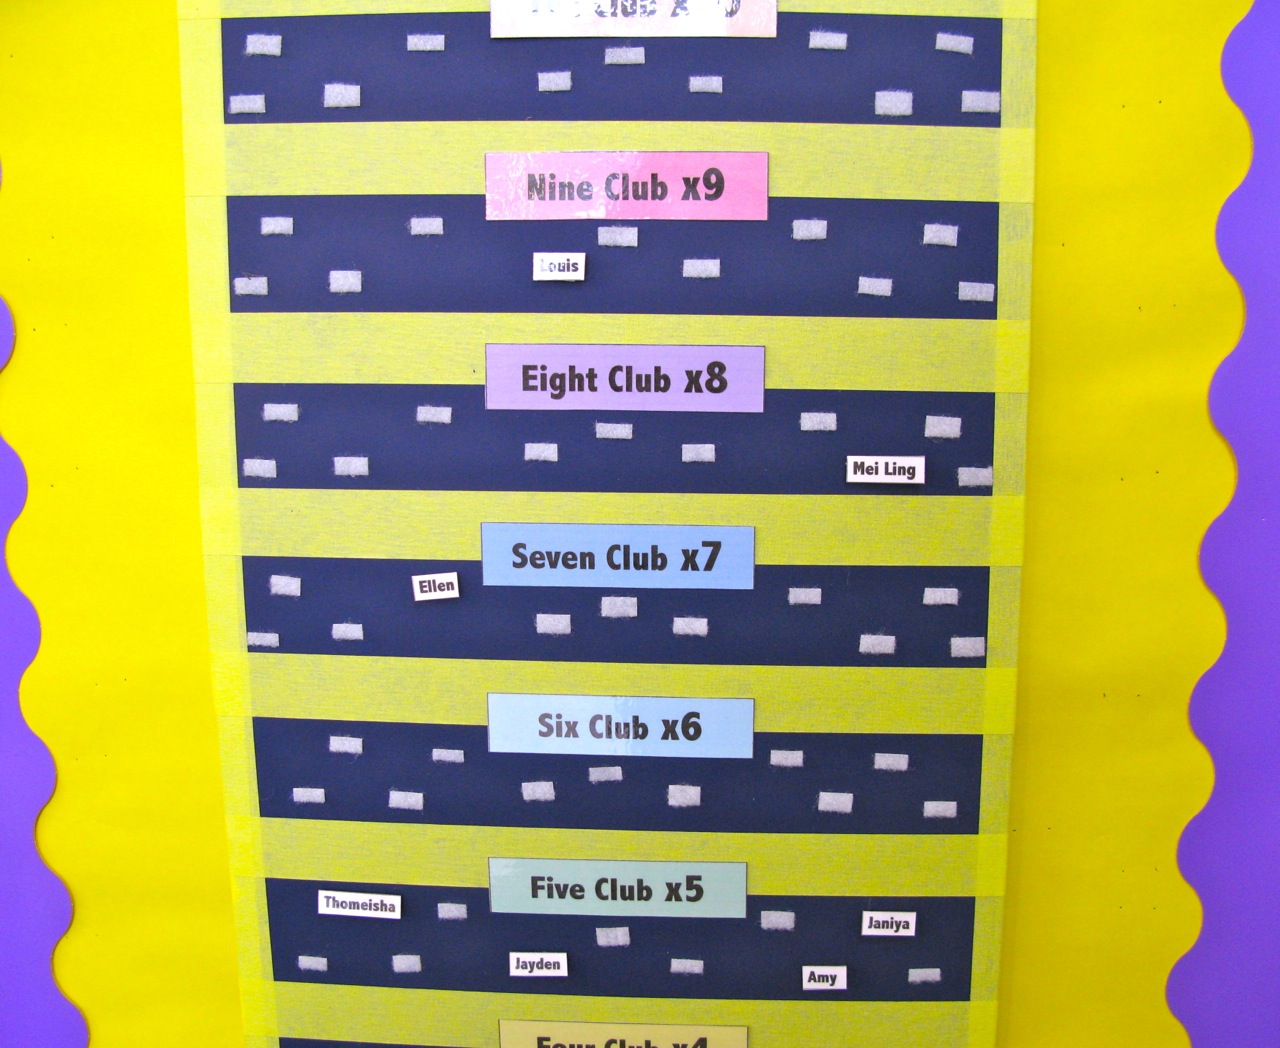 Student Multiplication Chart